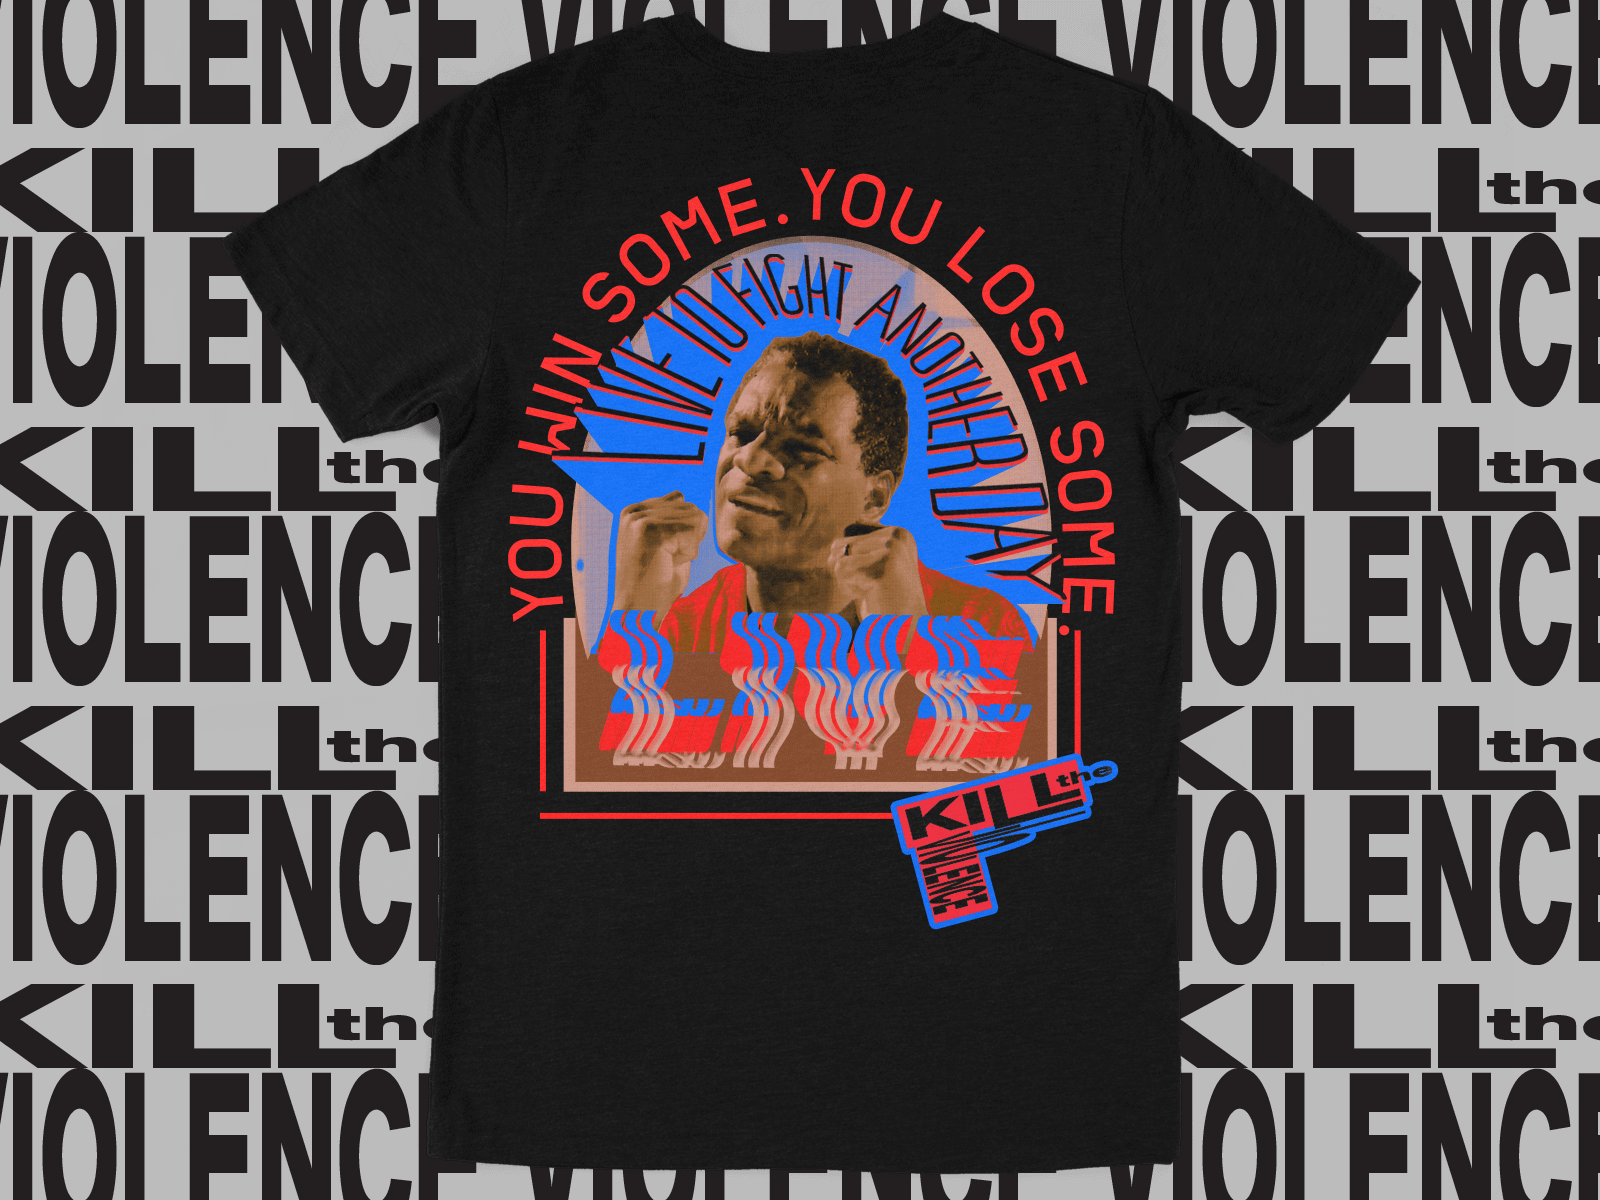 Kill the Violence Shirt t shirt